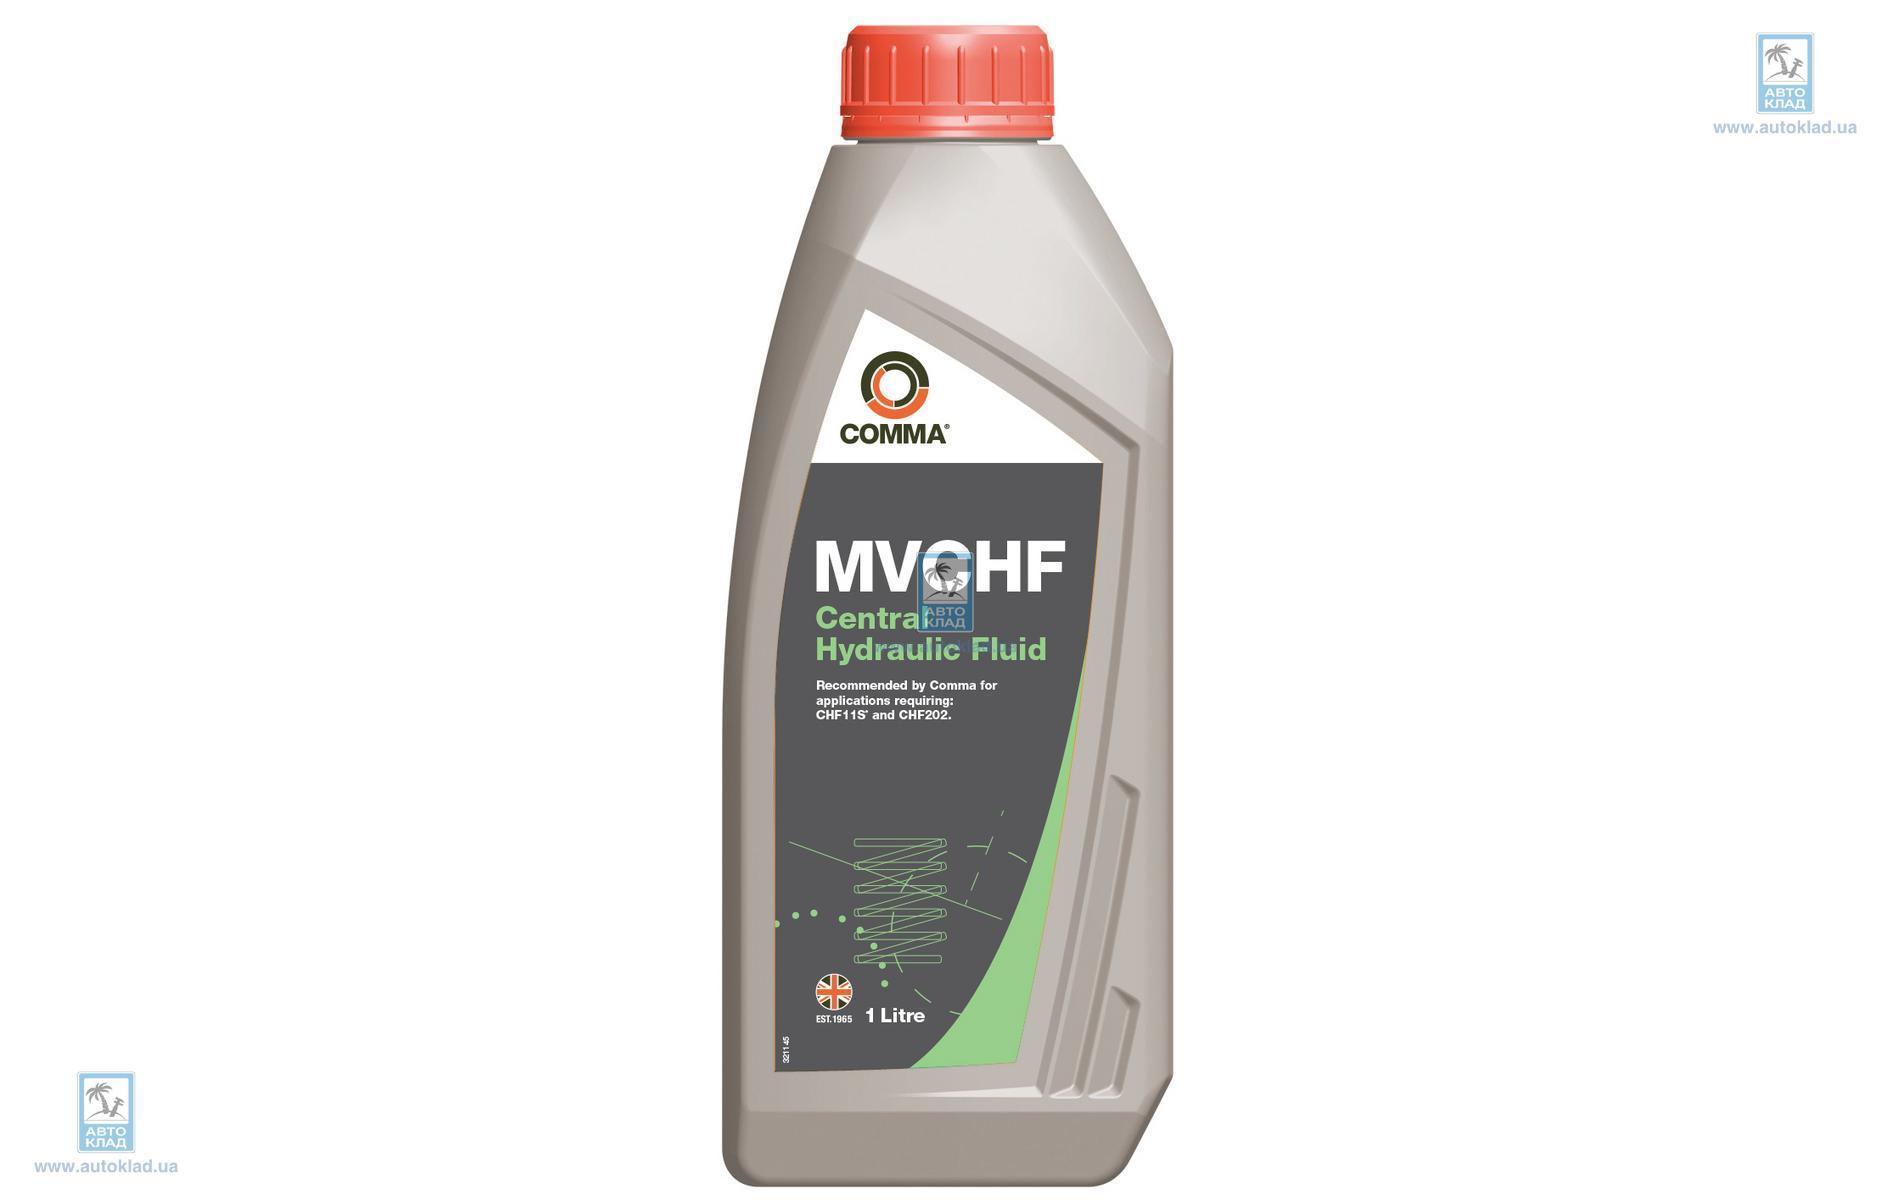 Масло гидравлическое MVCHF Central Hydraulic Fluid 1л COMMA MVCHF11SCENT1L